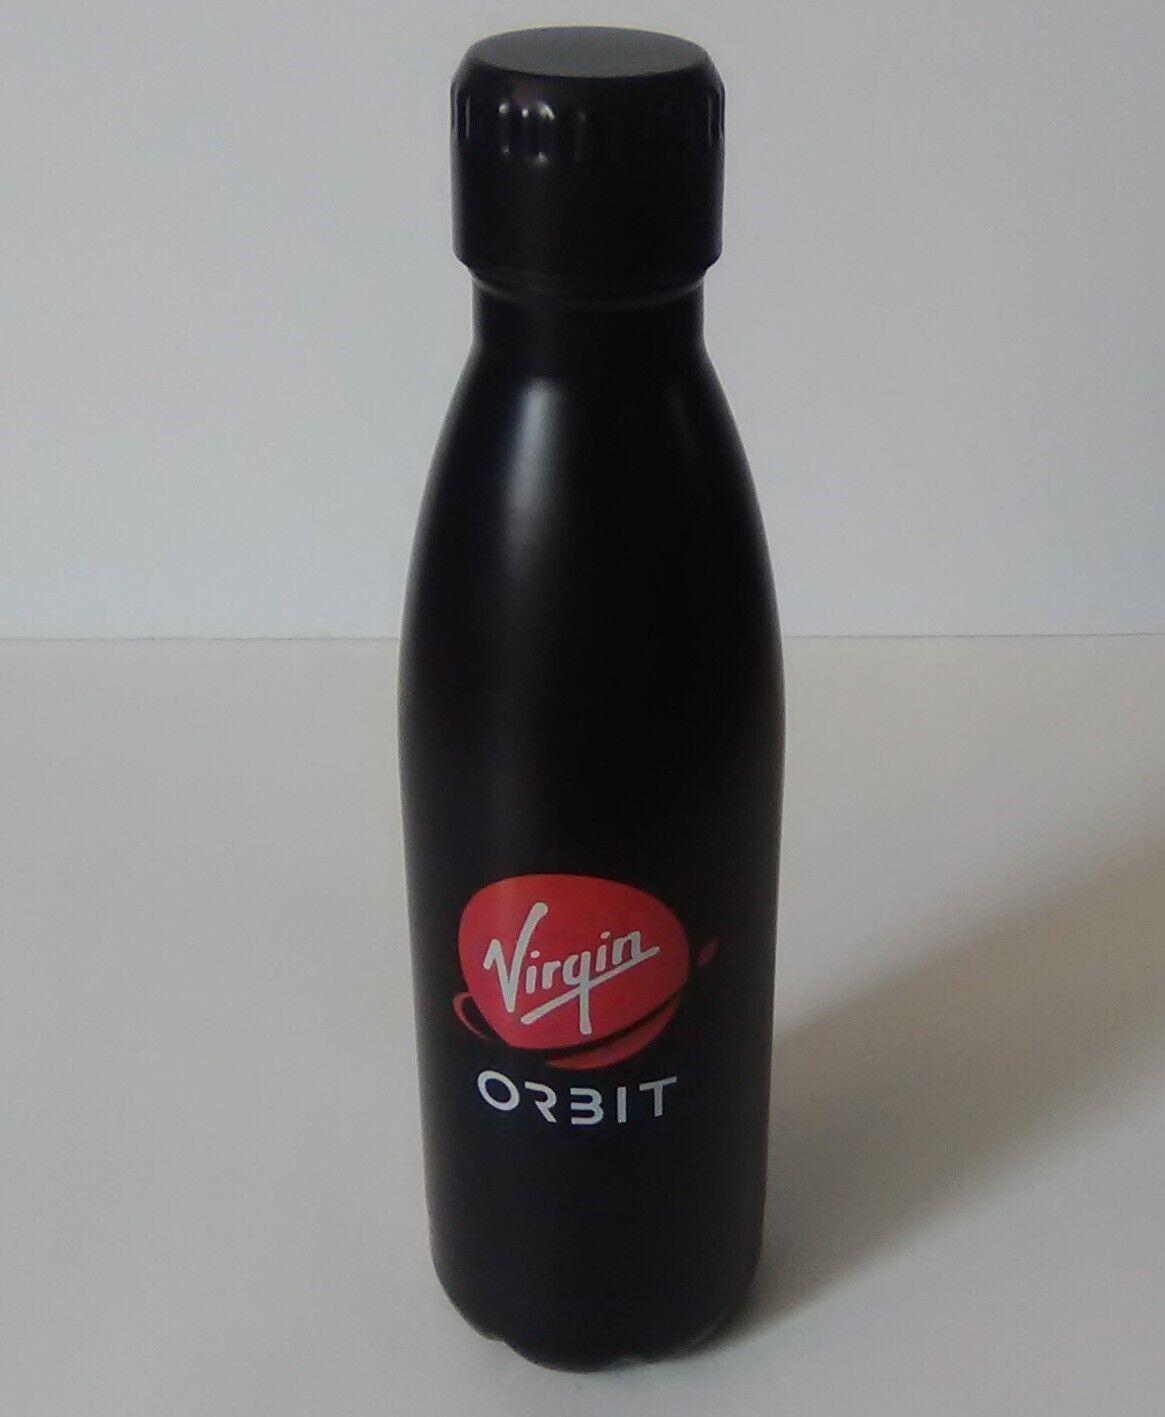 RARE Virgin Orbit water bottle - defunct satellite company - Richard Branson